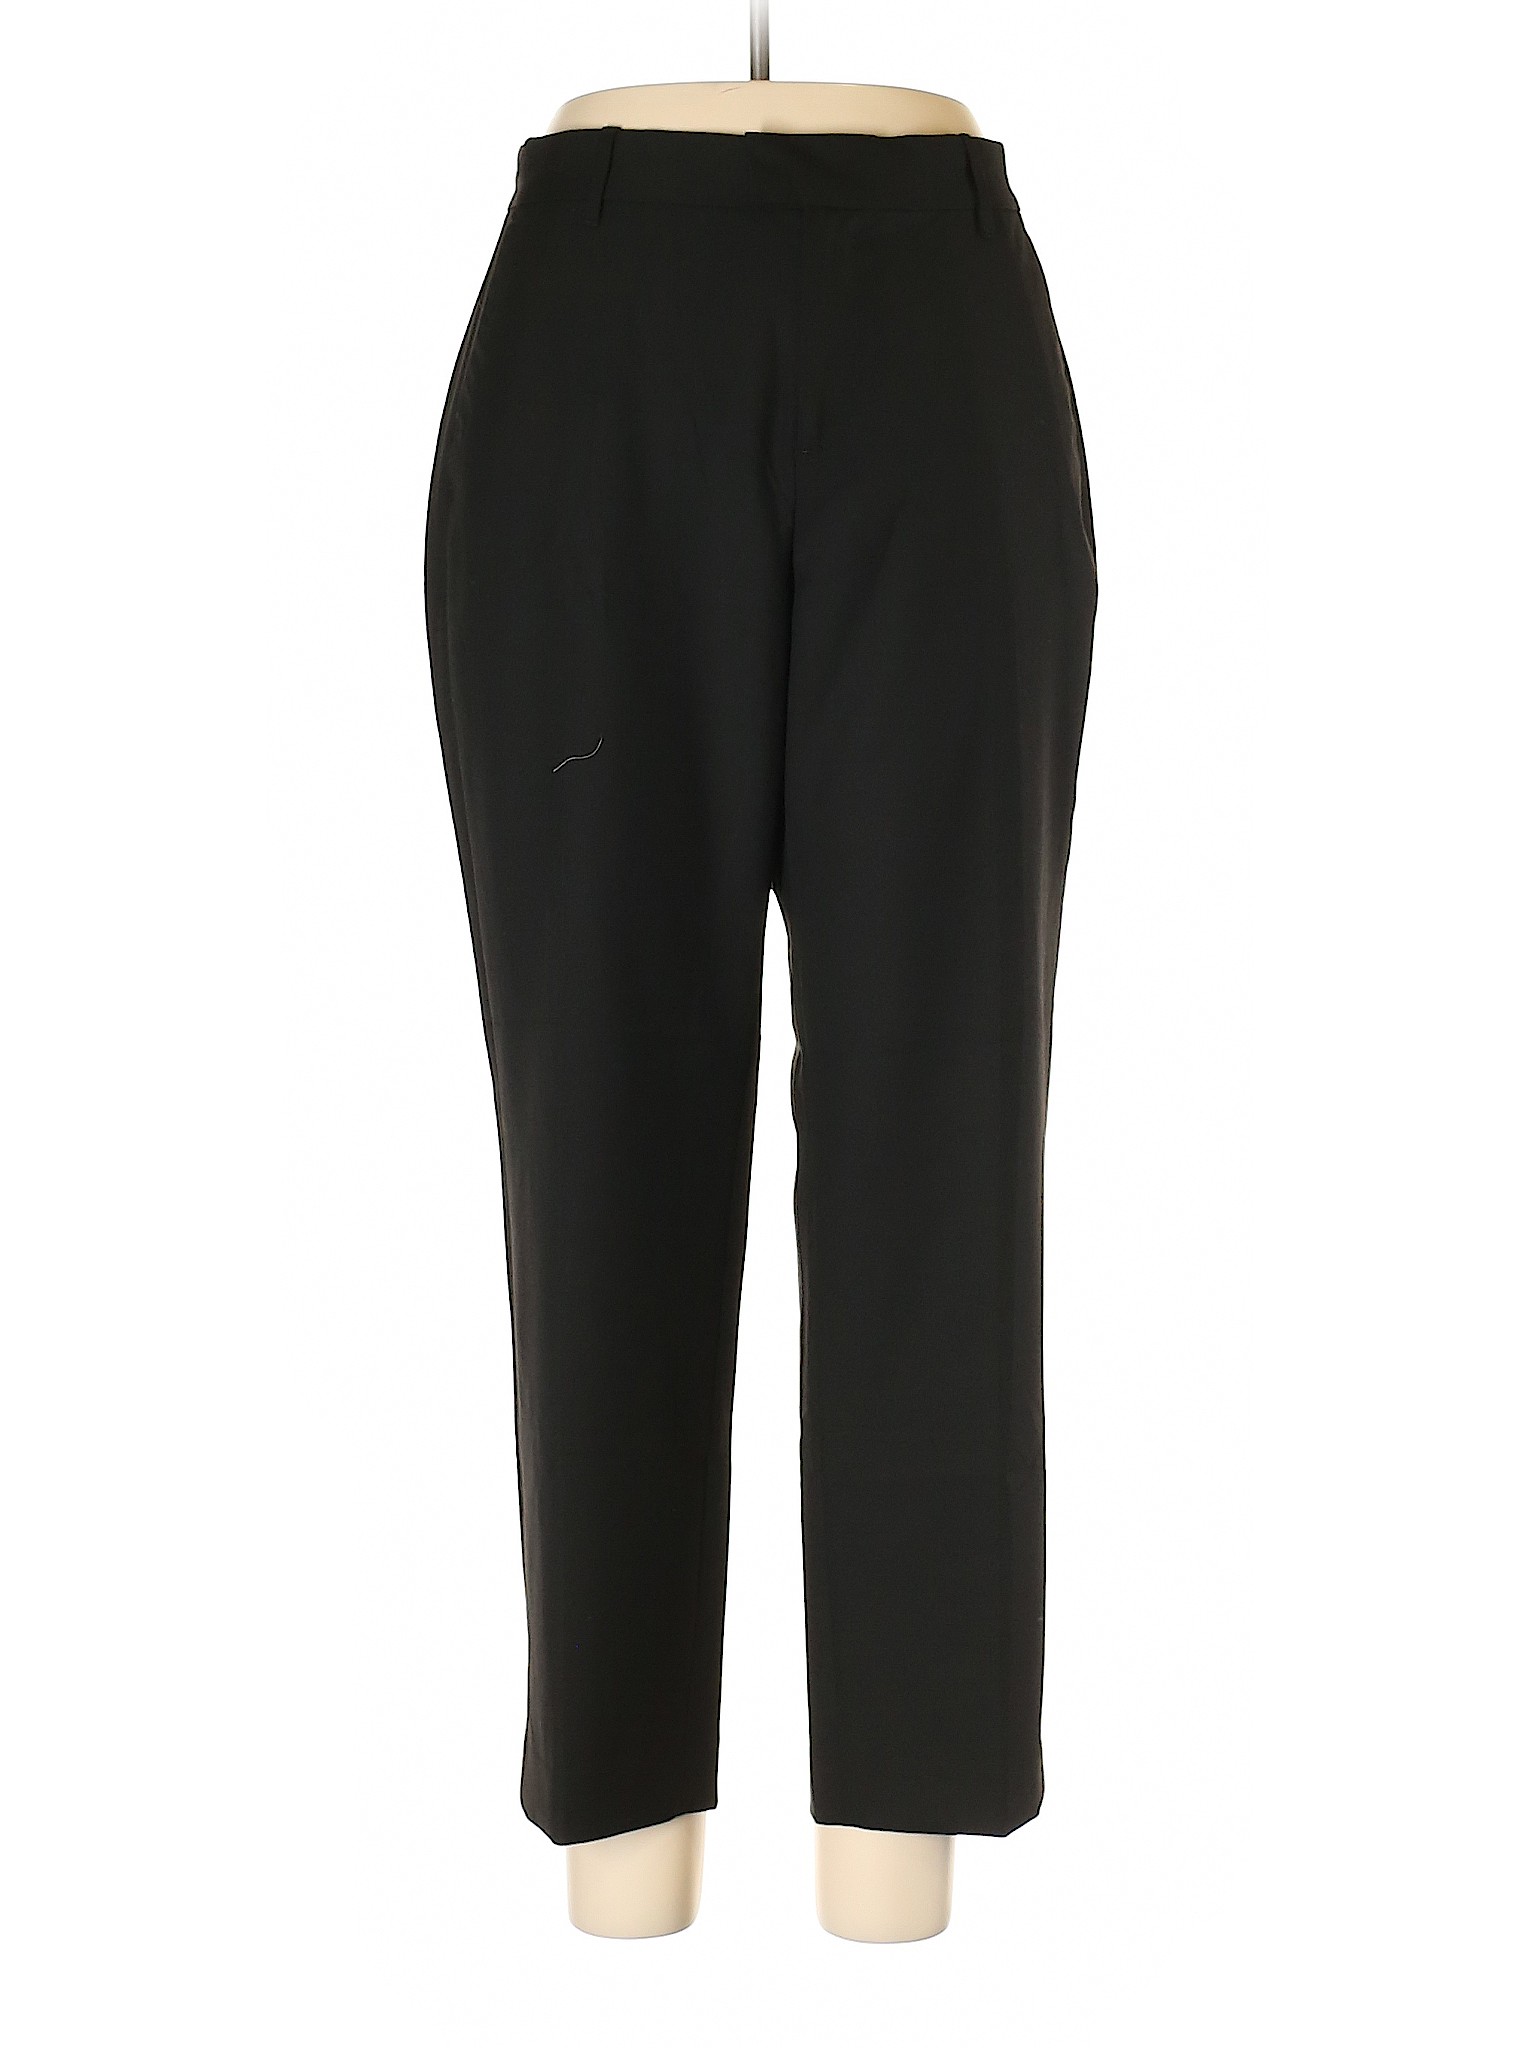 Gap Solid Black Dress Pants Size 14 - 65% off | thredUP